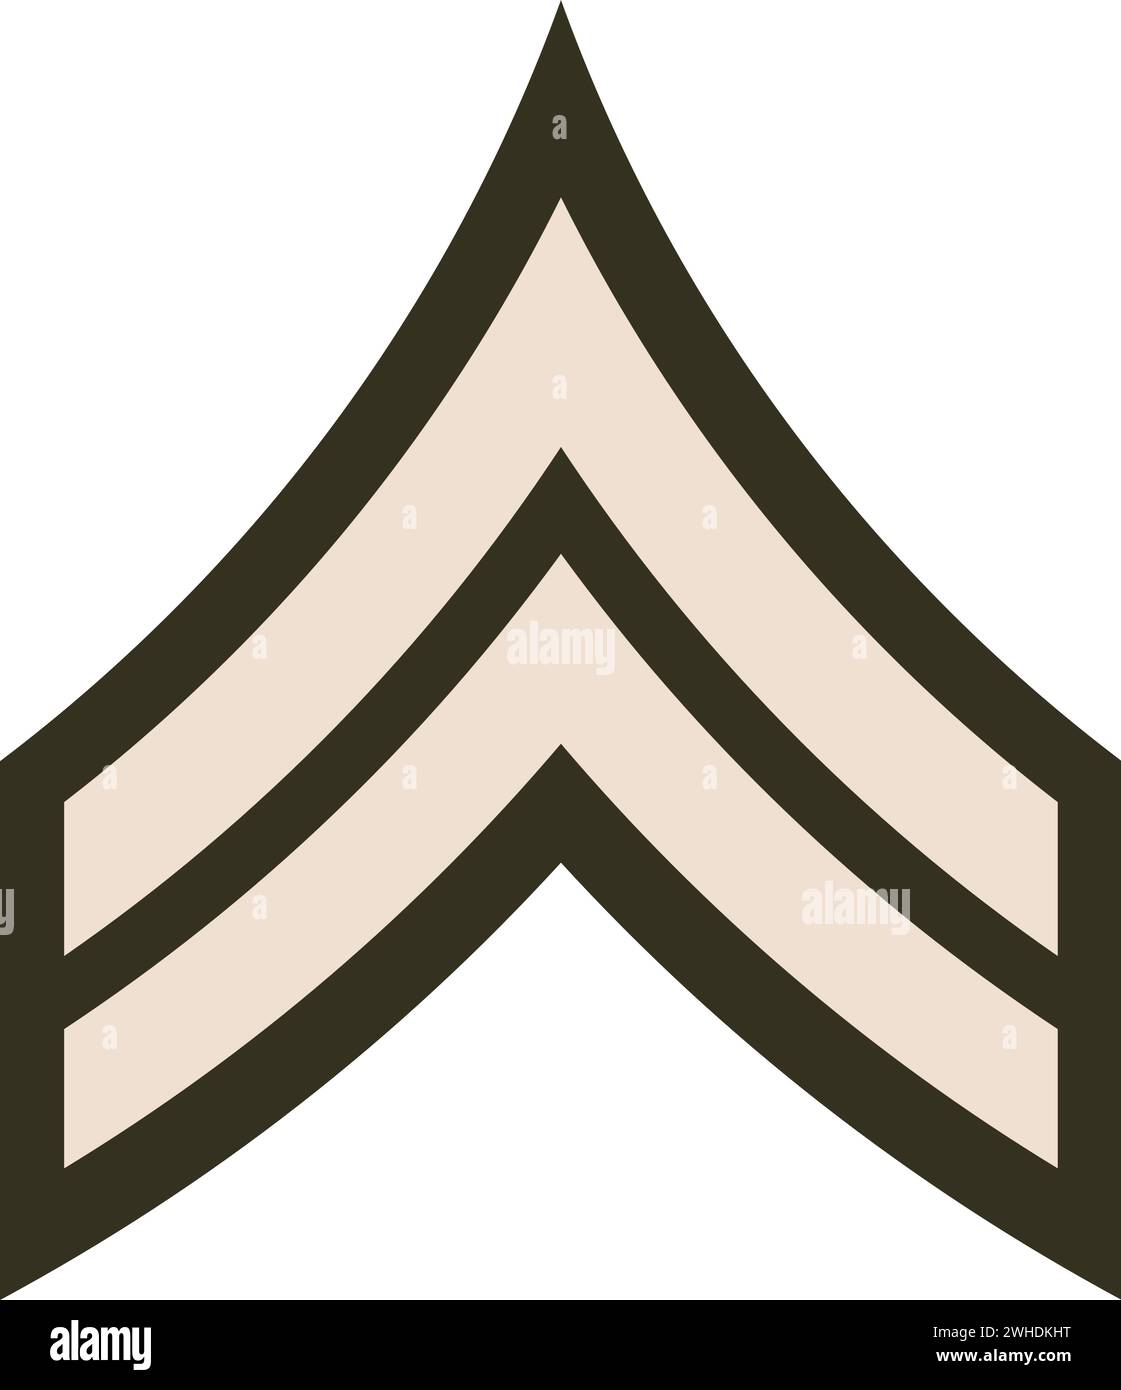 Schulterpolster Militär hat Rang-Insignien des US Army CORPORAL Stock Vektor